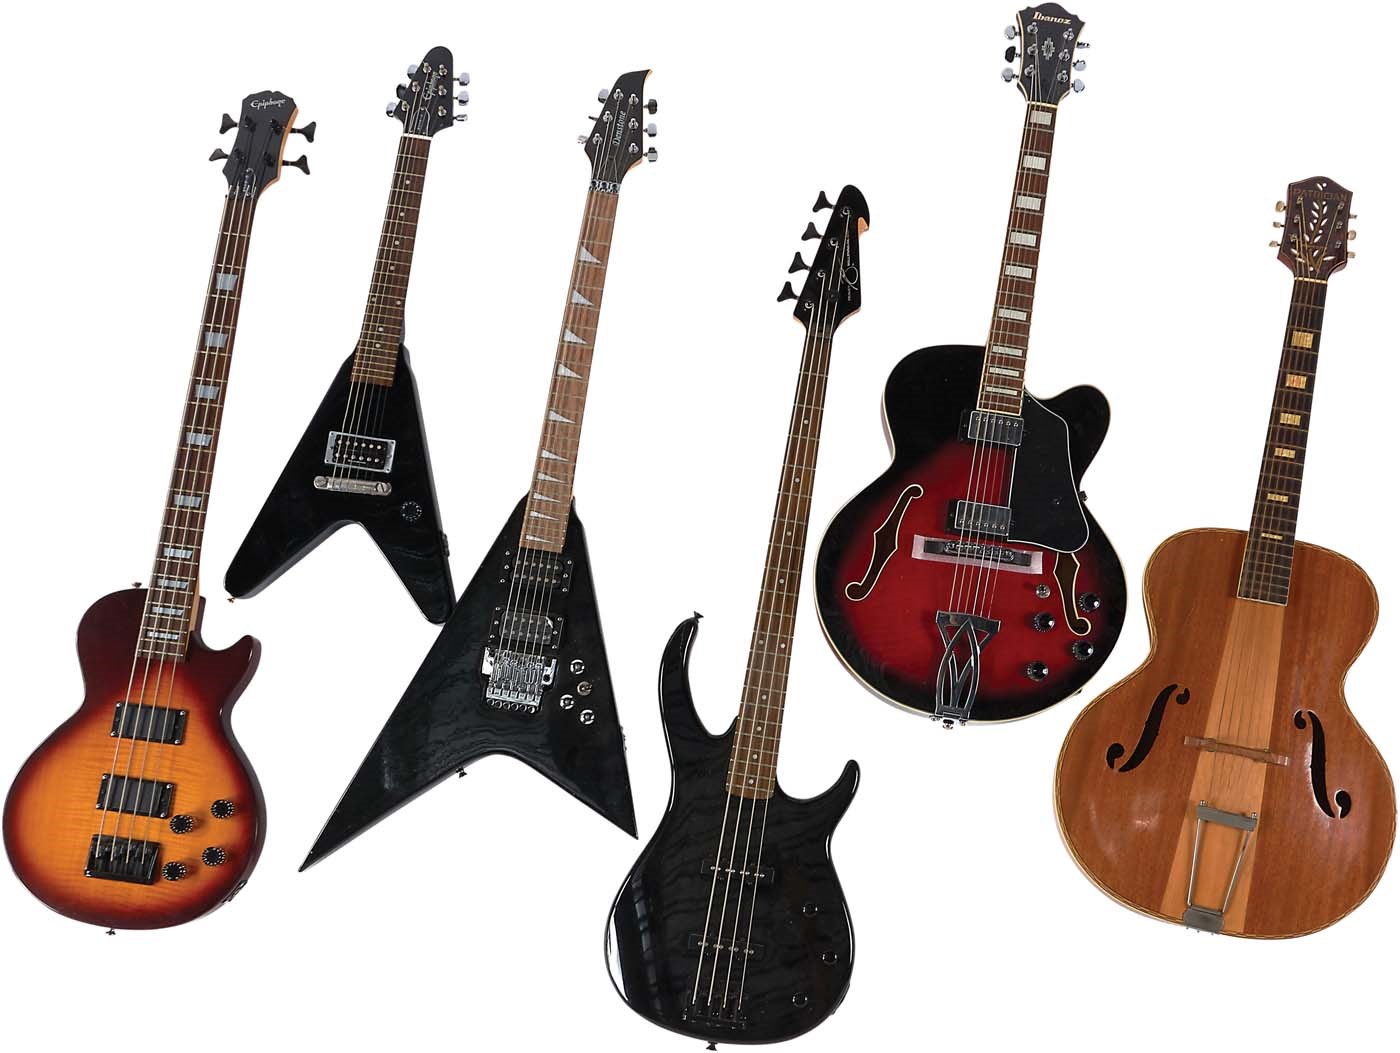 Rock 'N' Roll - Vintage & Modern Guitar Collection (7)